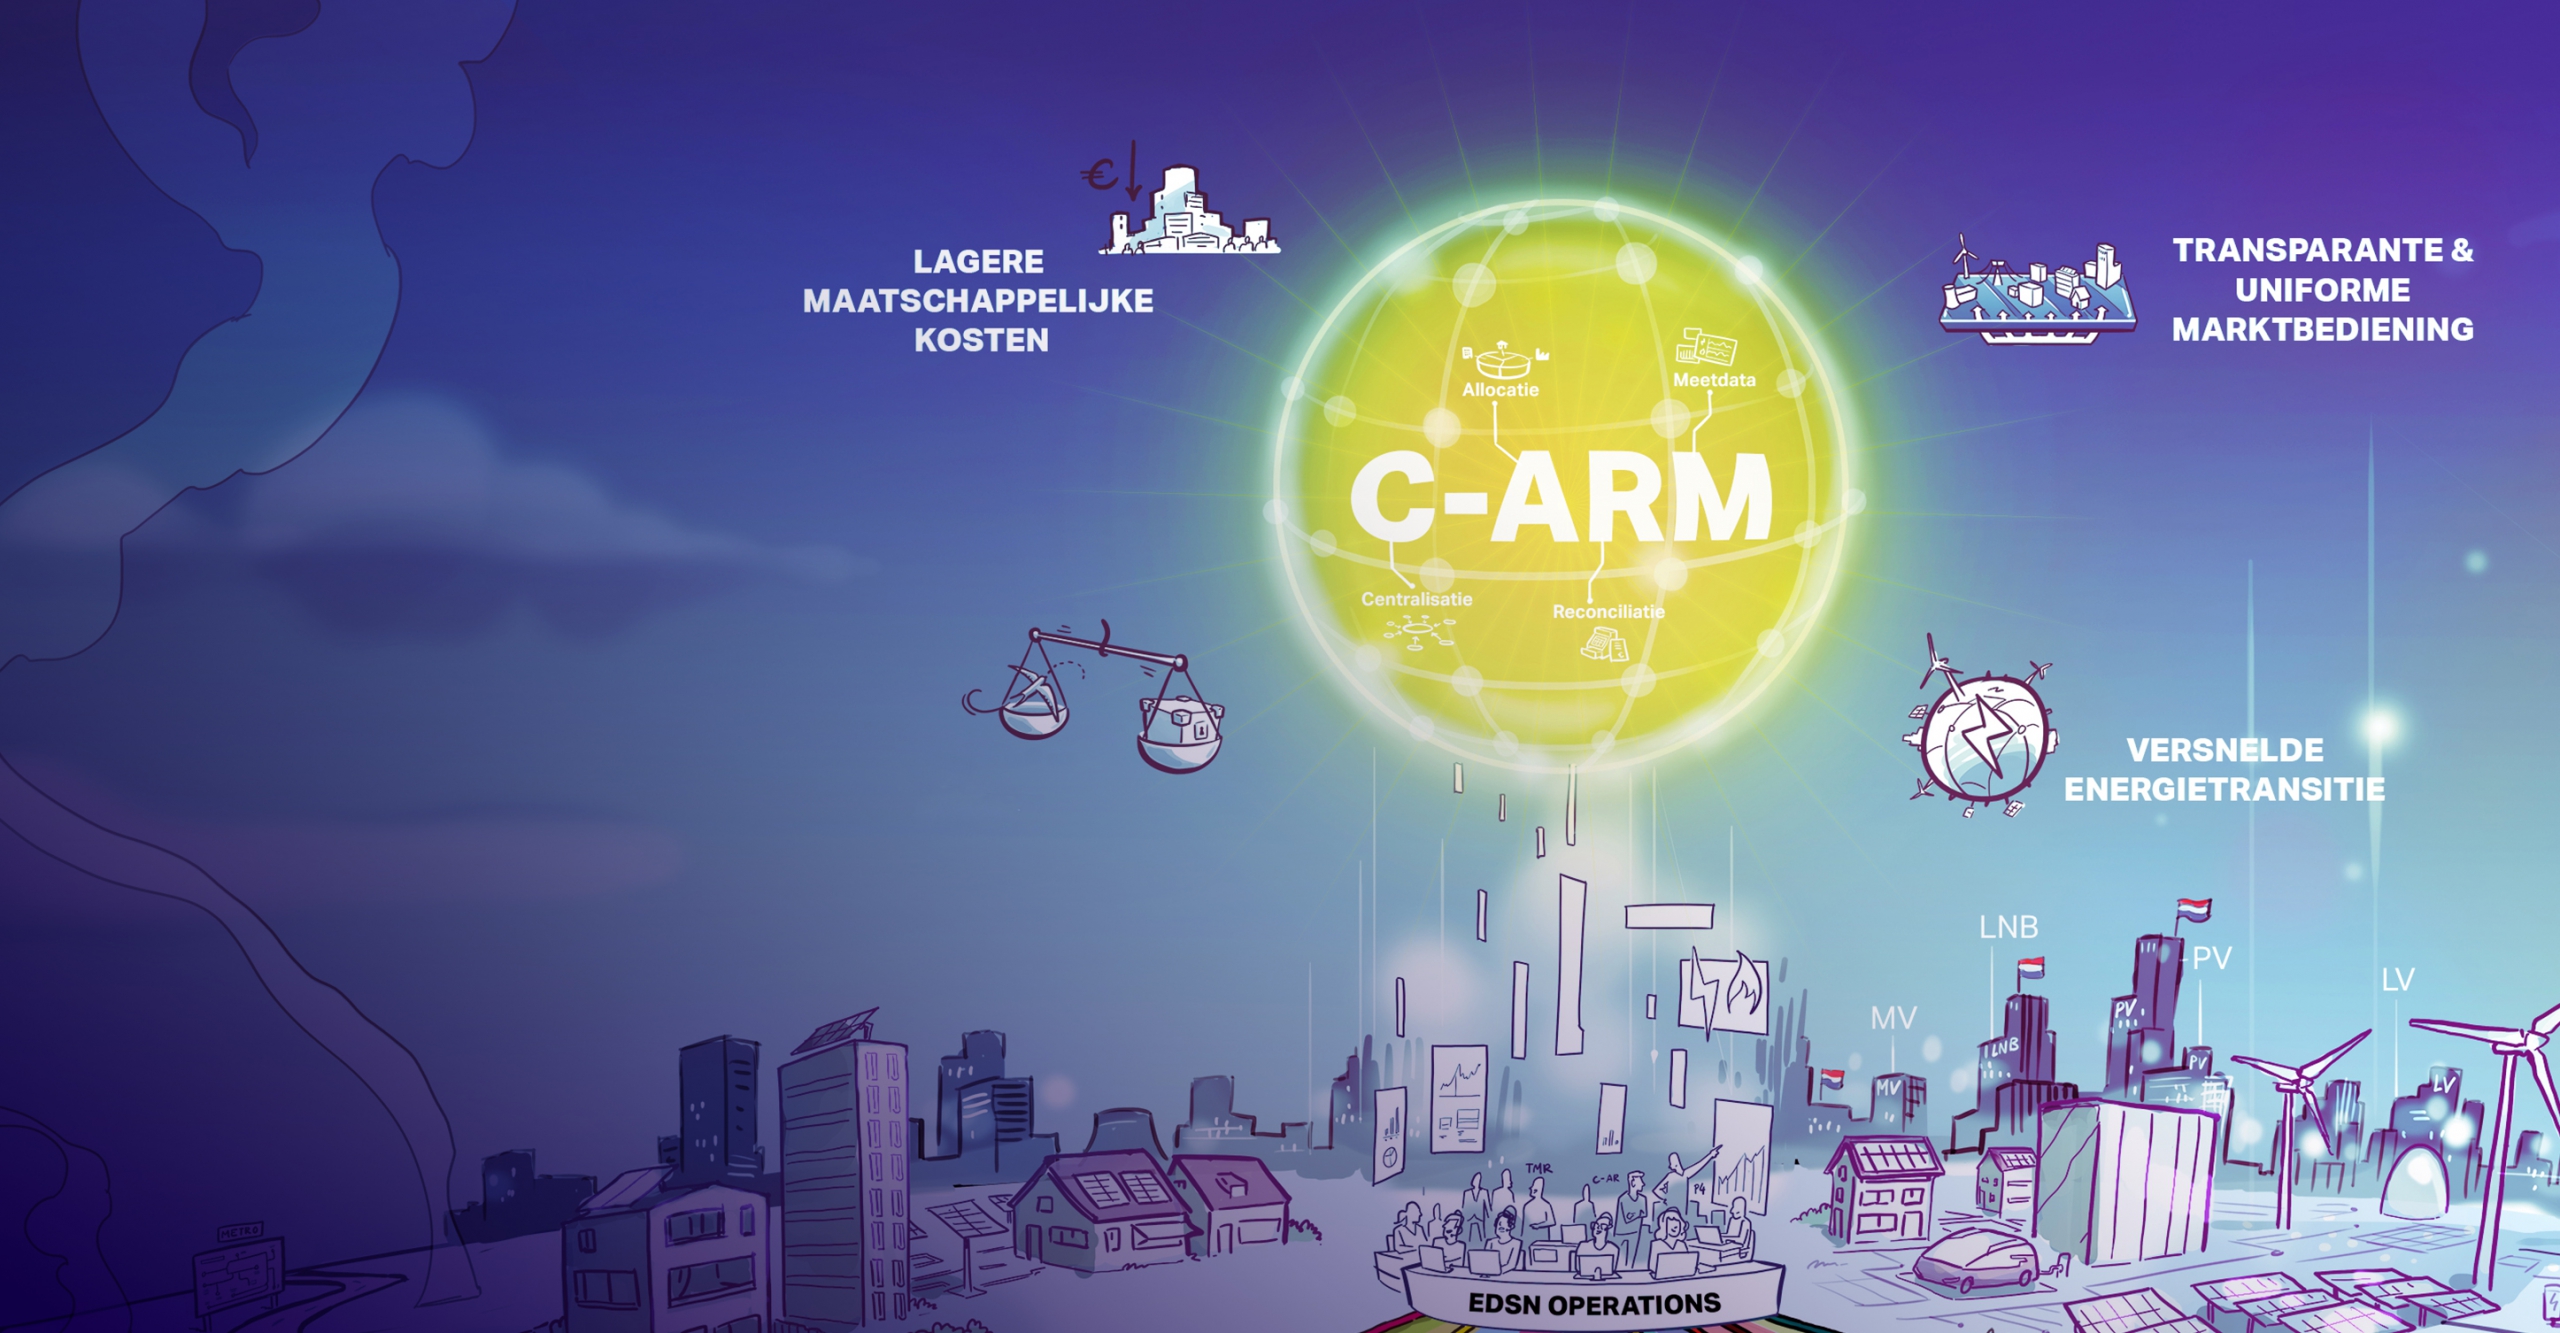 C-ARM - Clarifying change processes